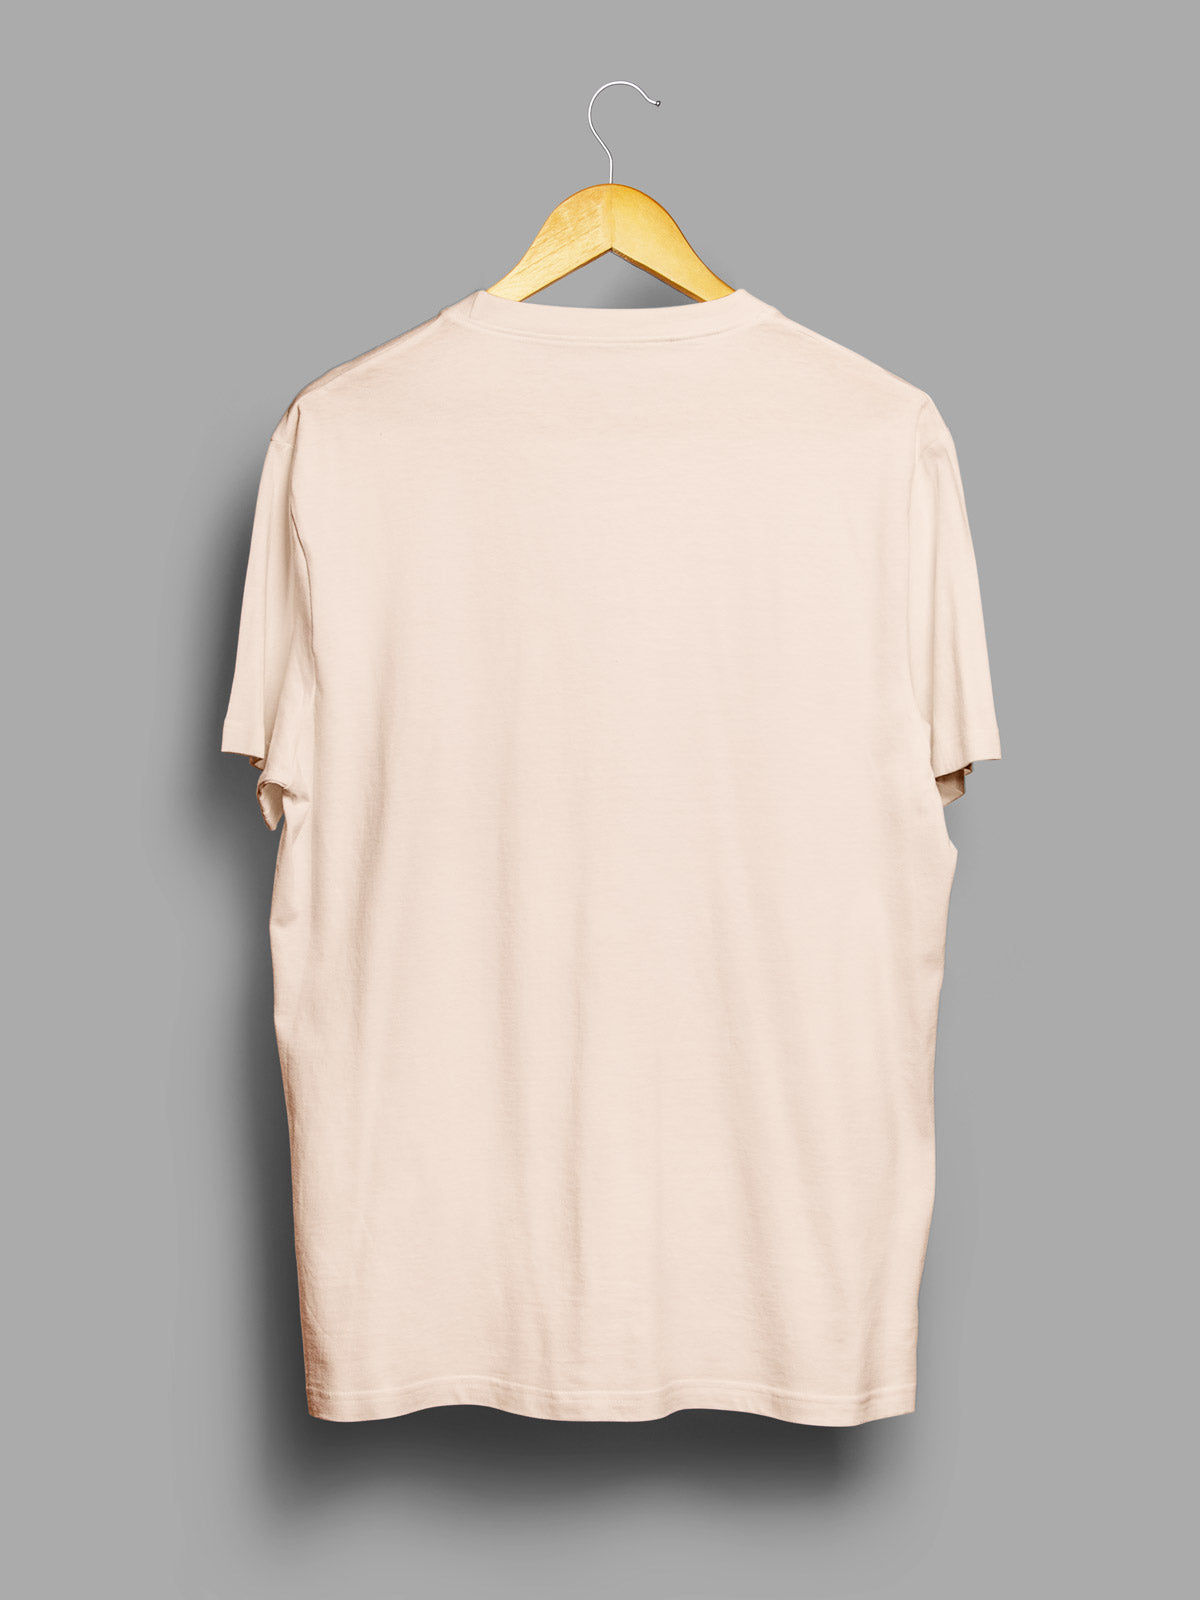 Muted-peach-t-shirt-for-men by Ghumakkad